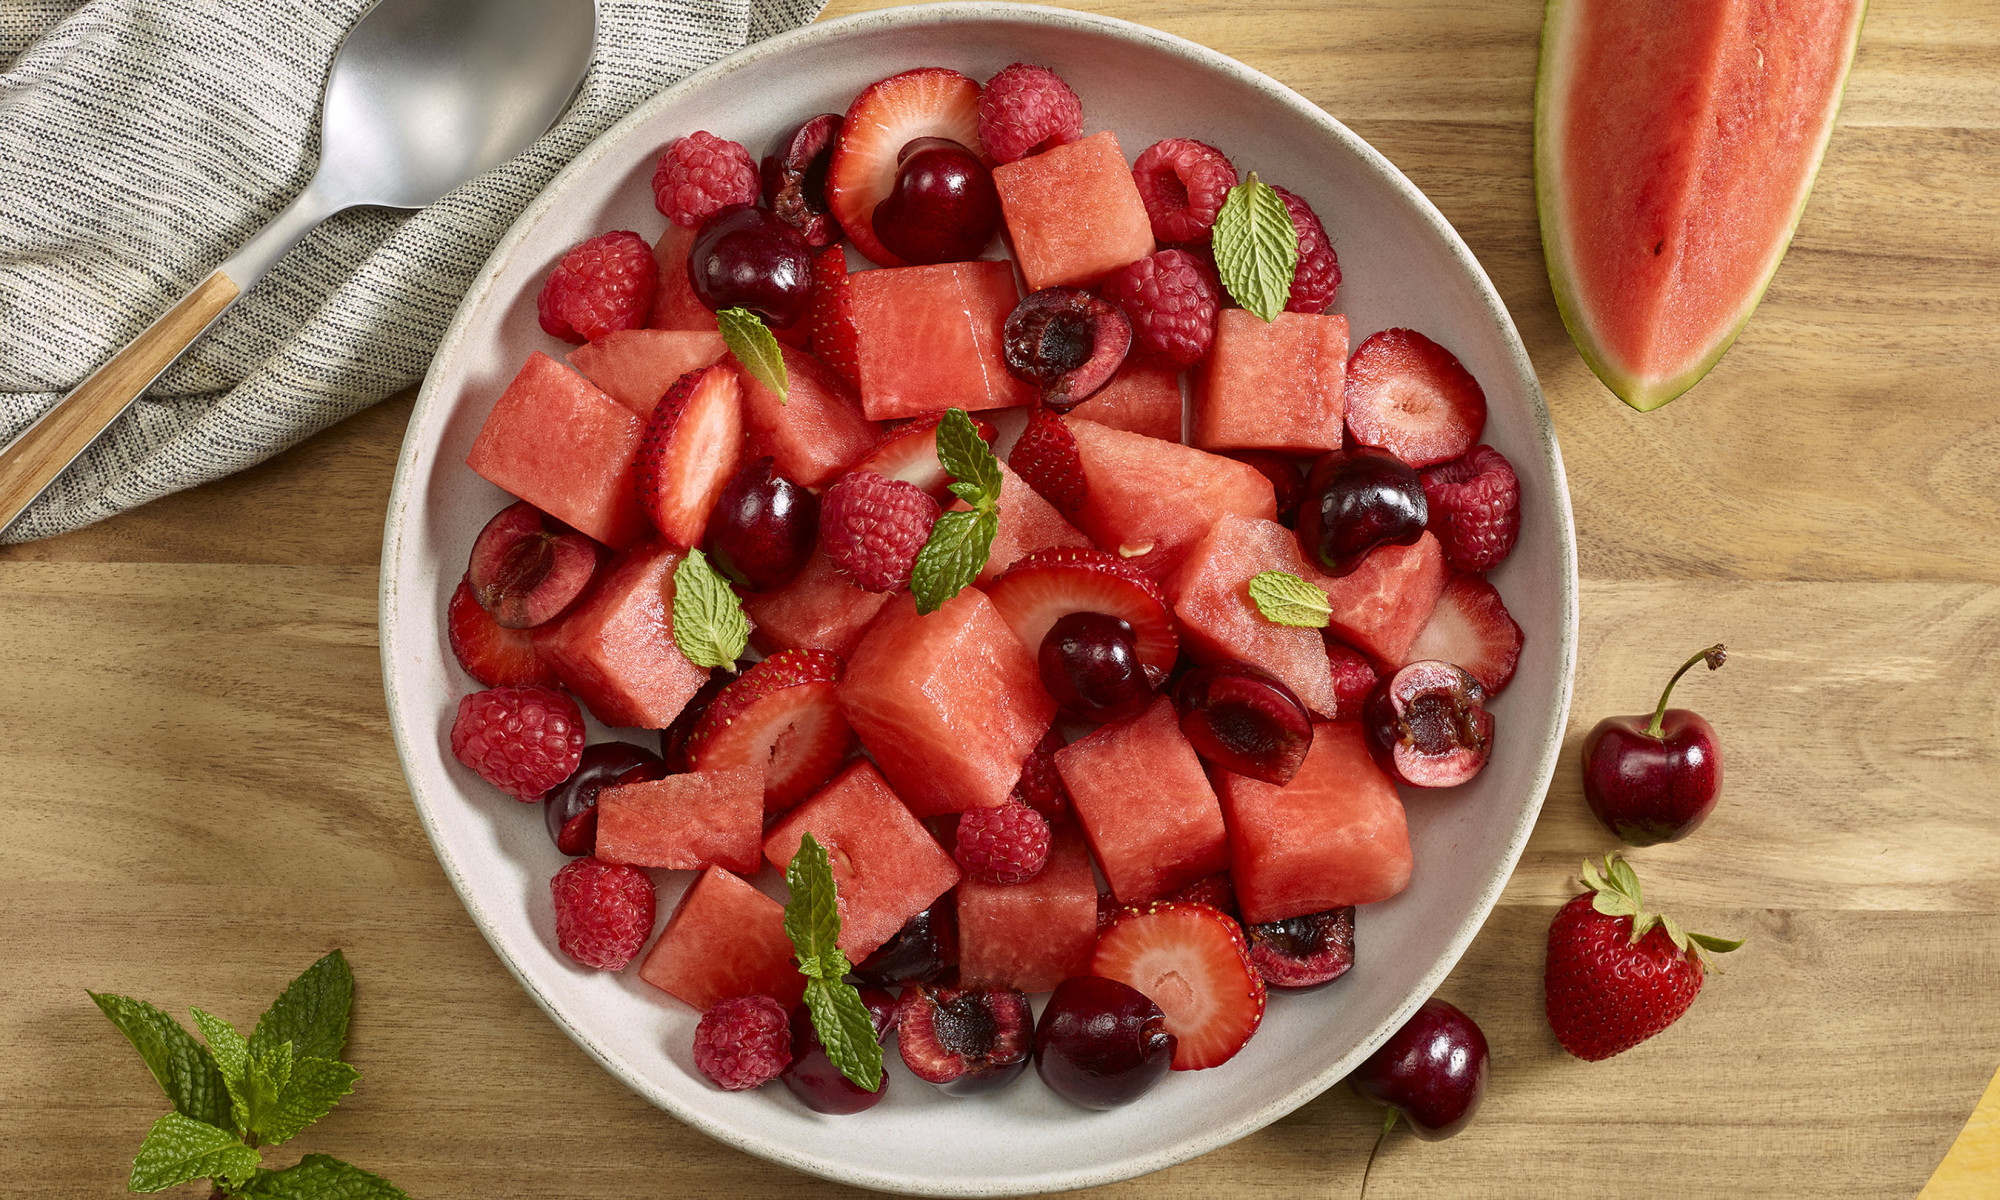 Red salad with watermelon raspberries, cherries and strawberries